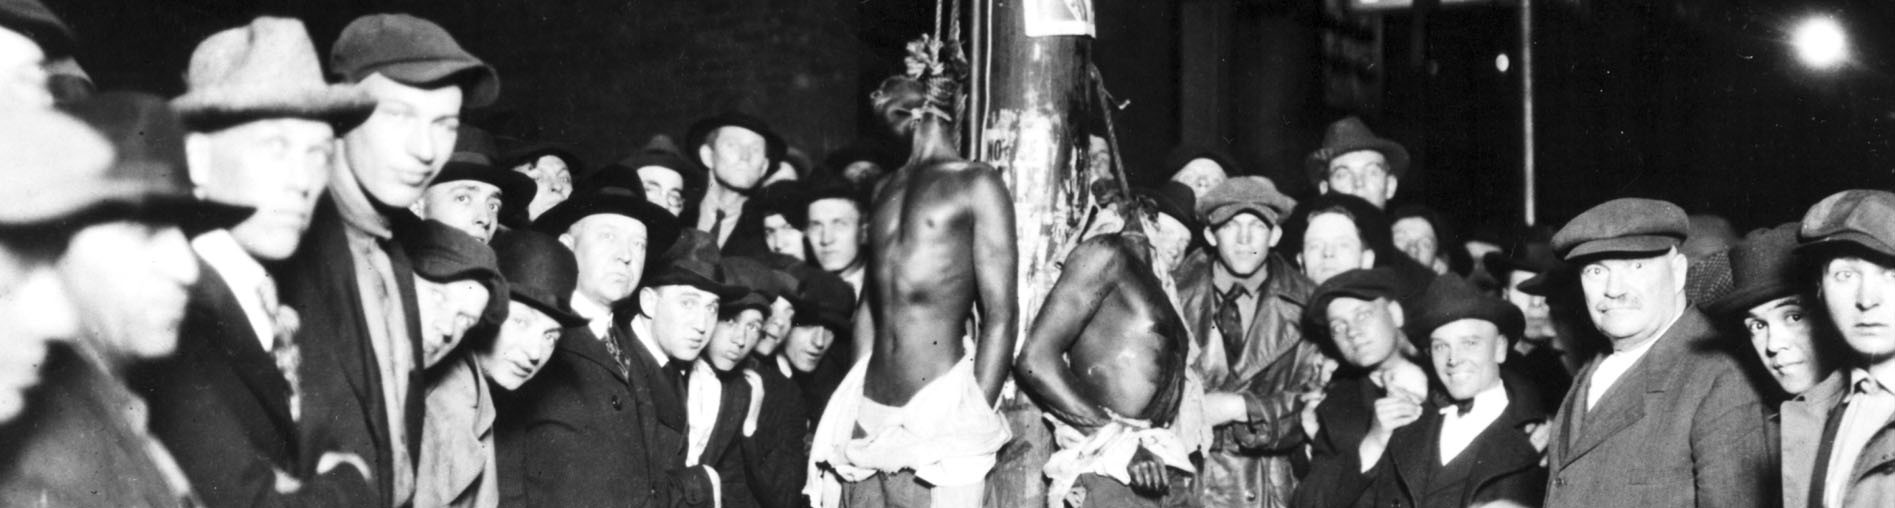 400 years a slave lynching